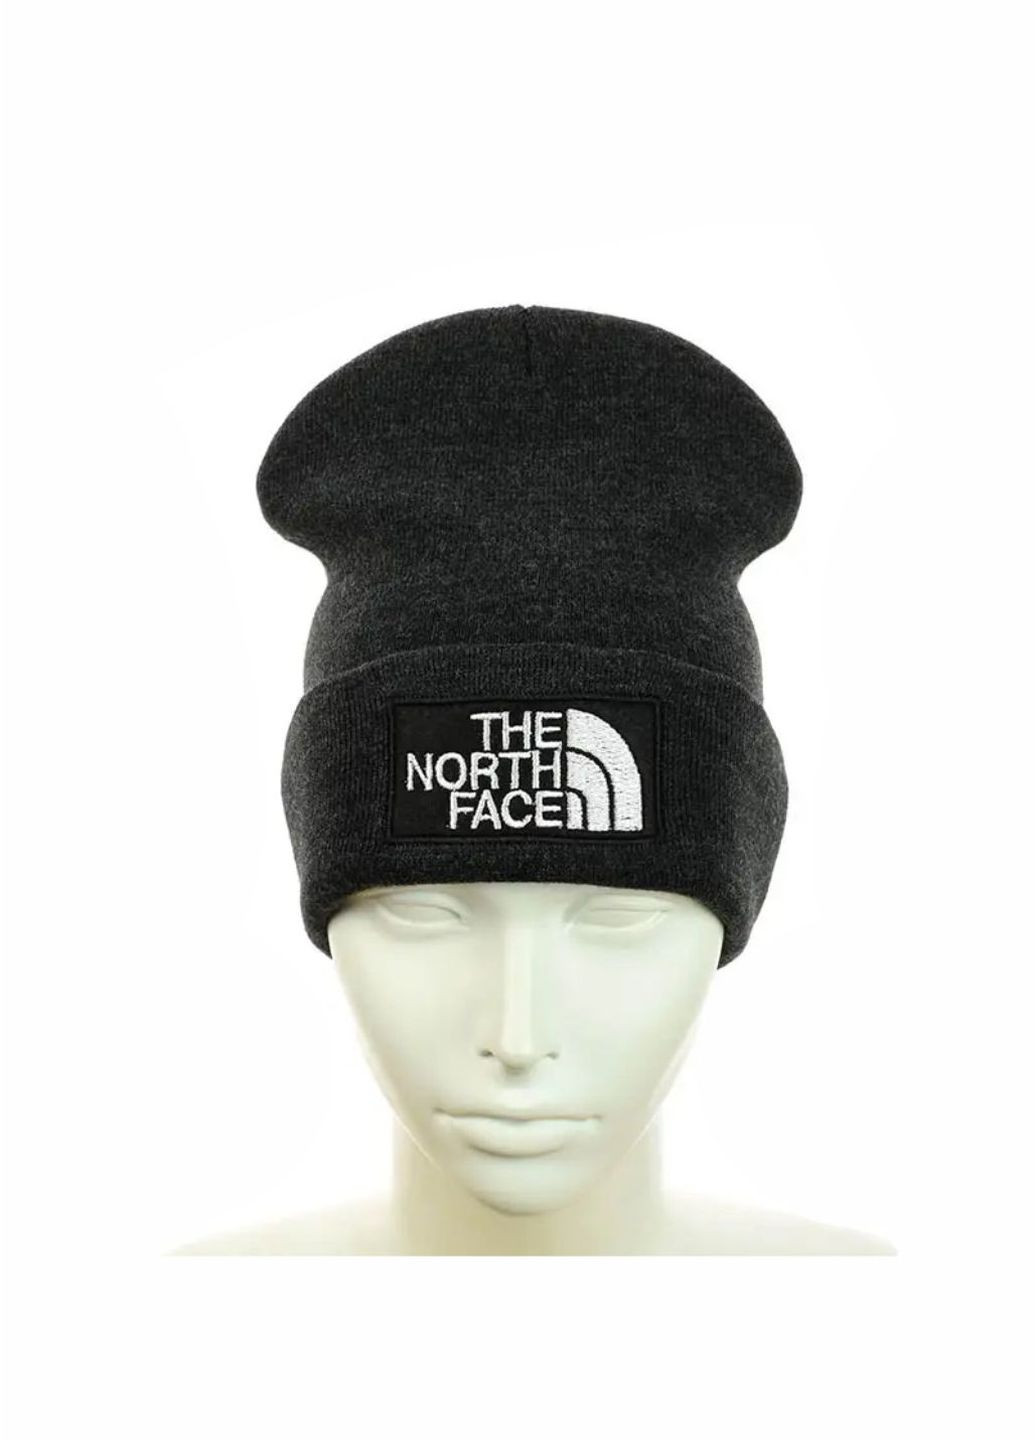 Молодіжна шапка біні лонг The North Face (Норт Фейс) No Brand бини лонг (276260576)